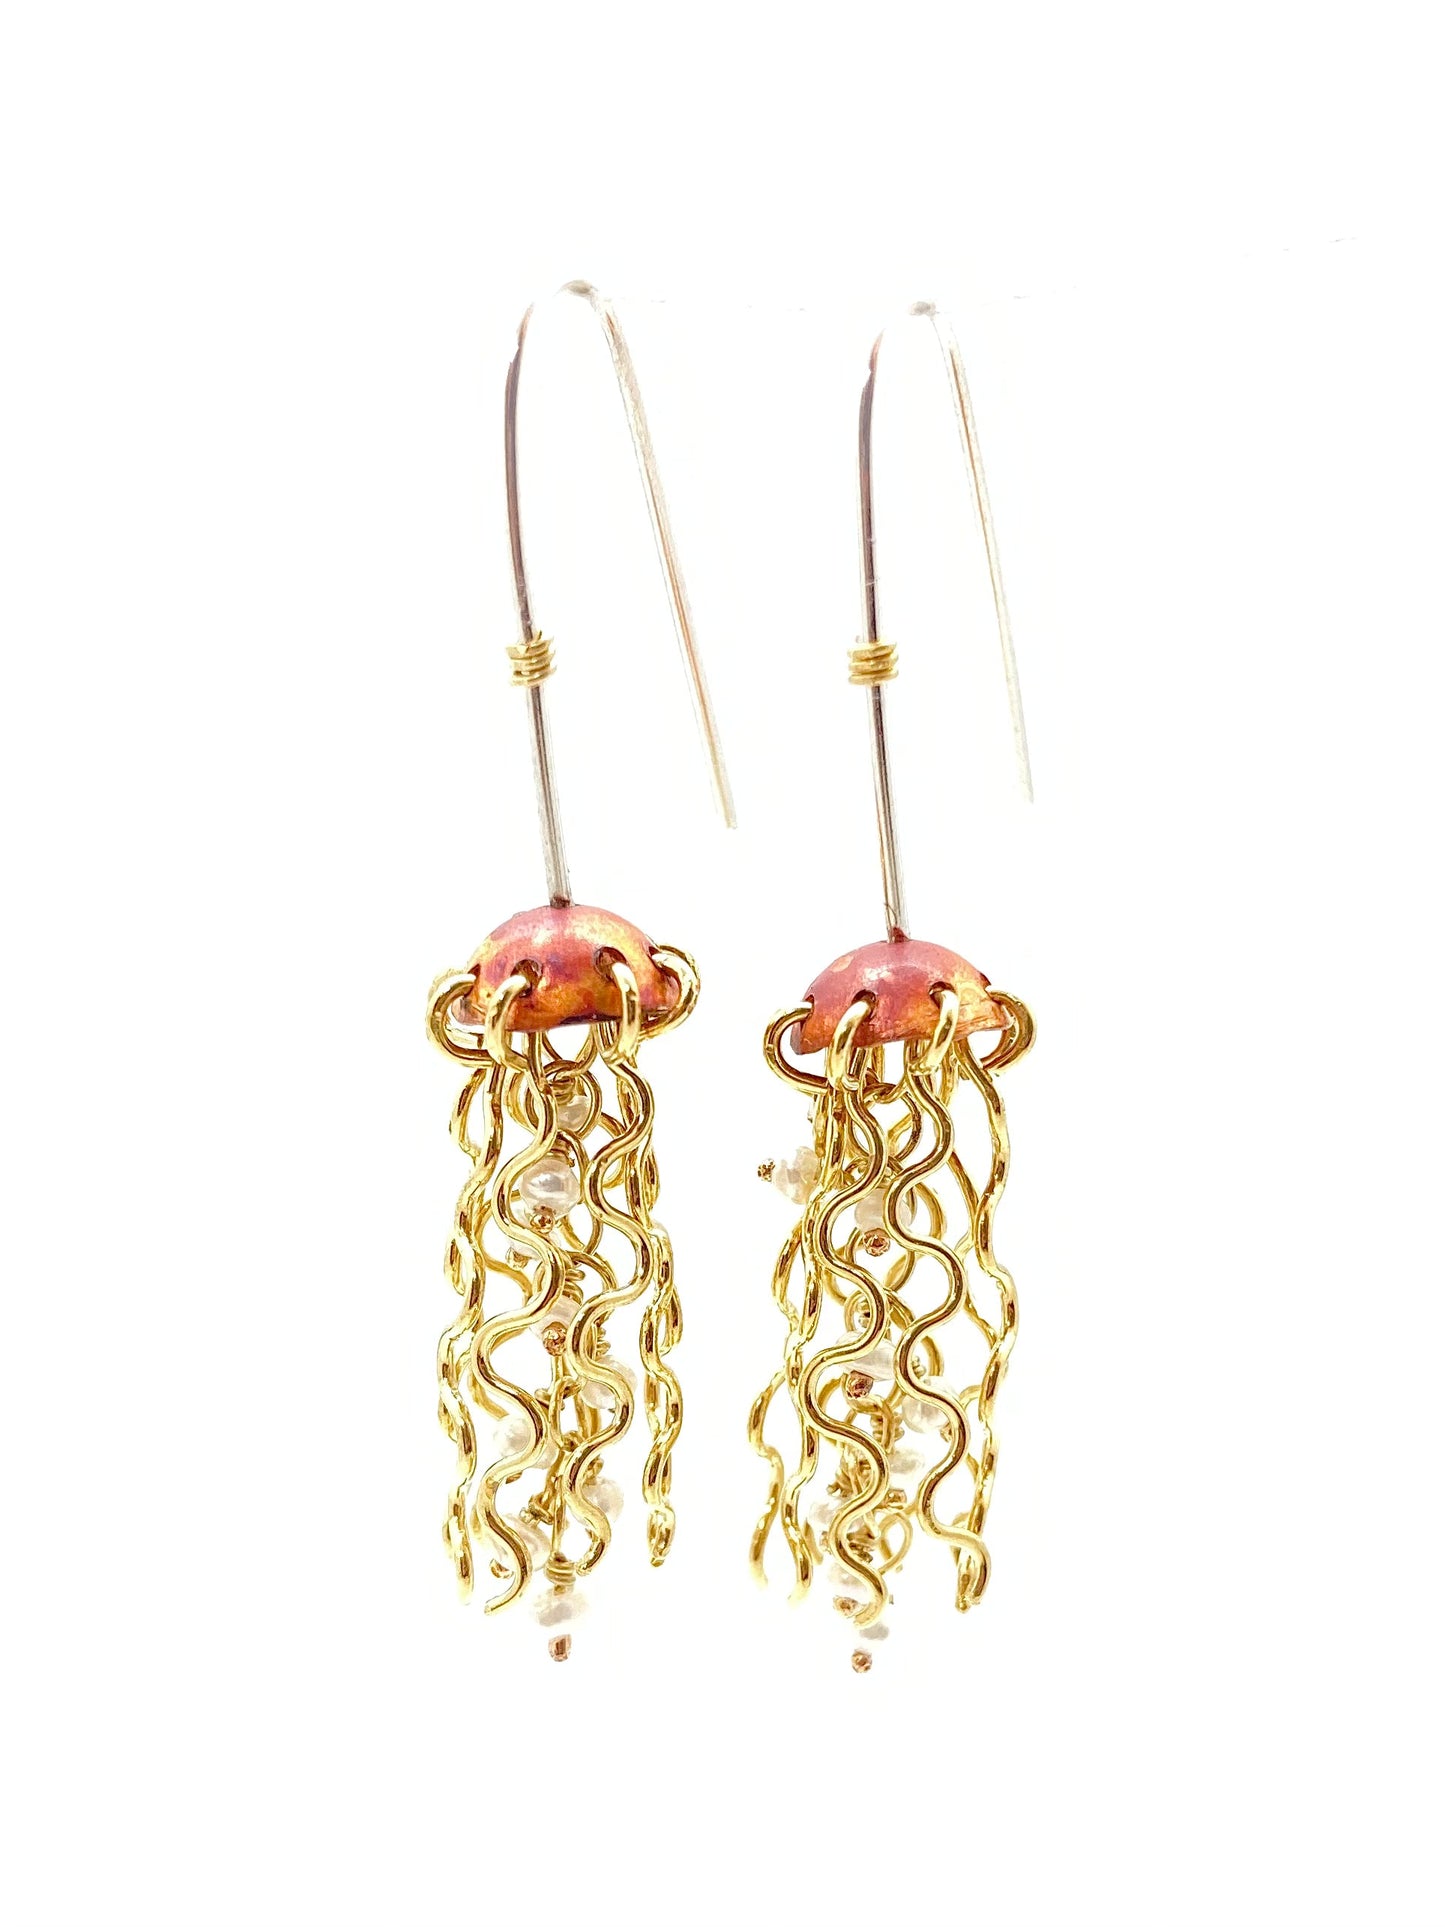 Mini jellyfish earrings at Heal